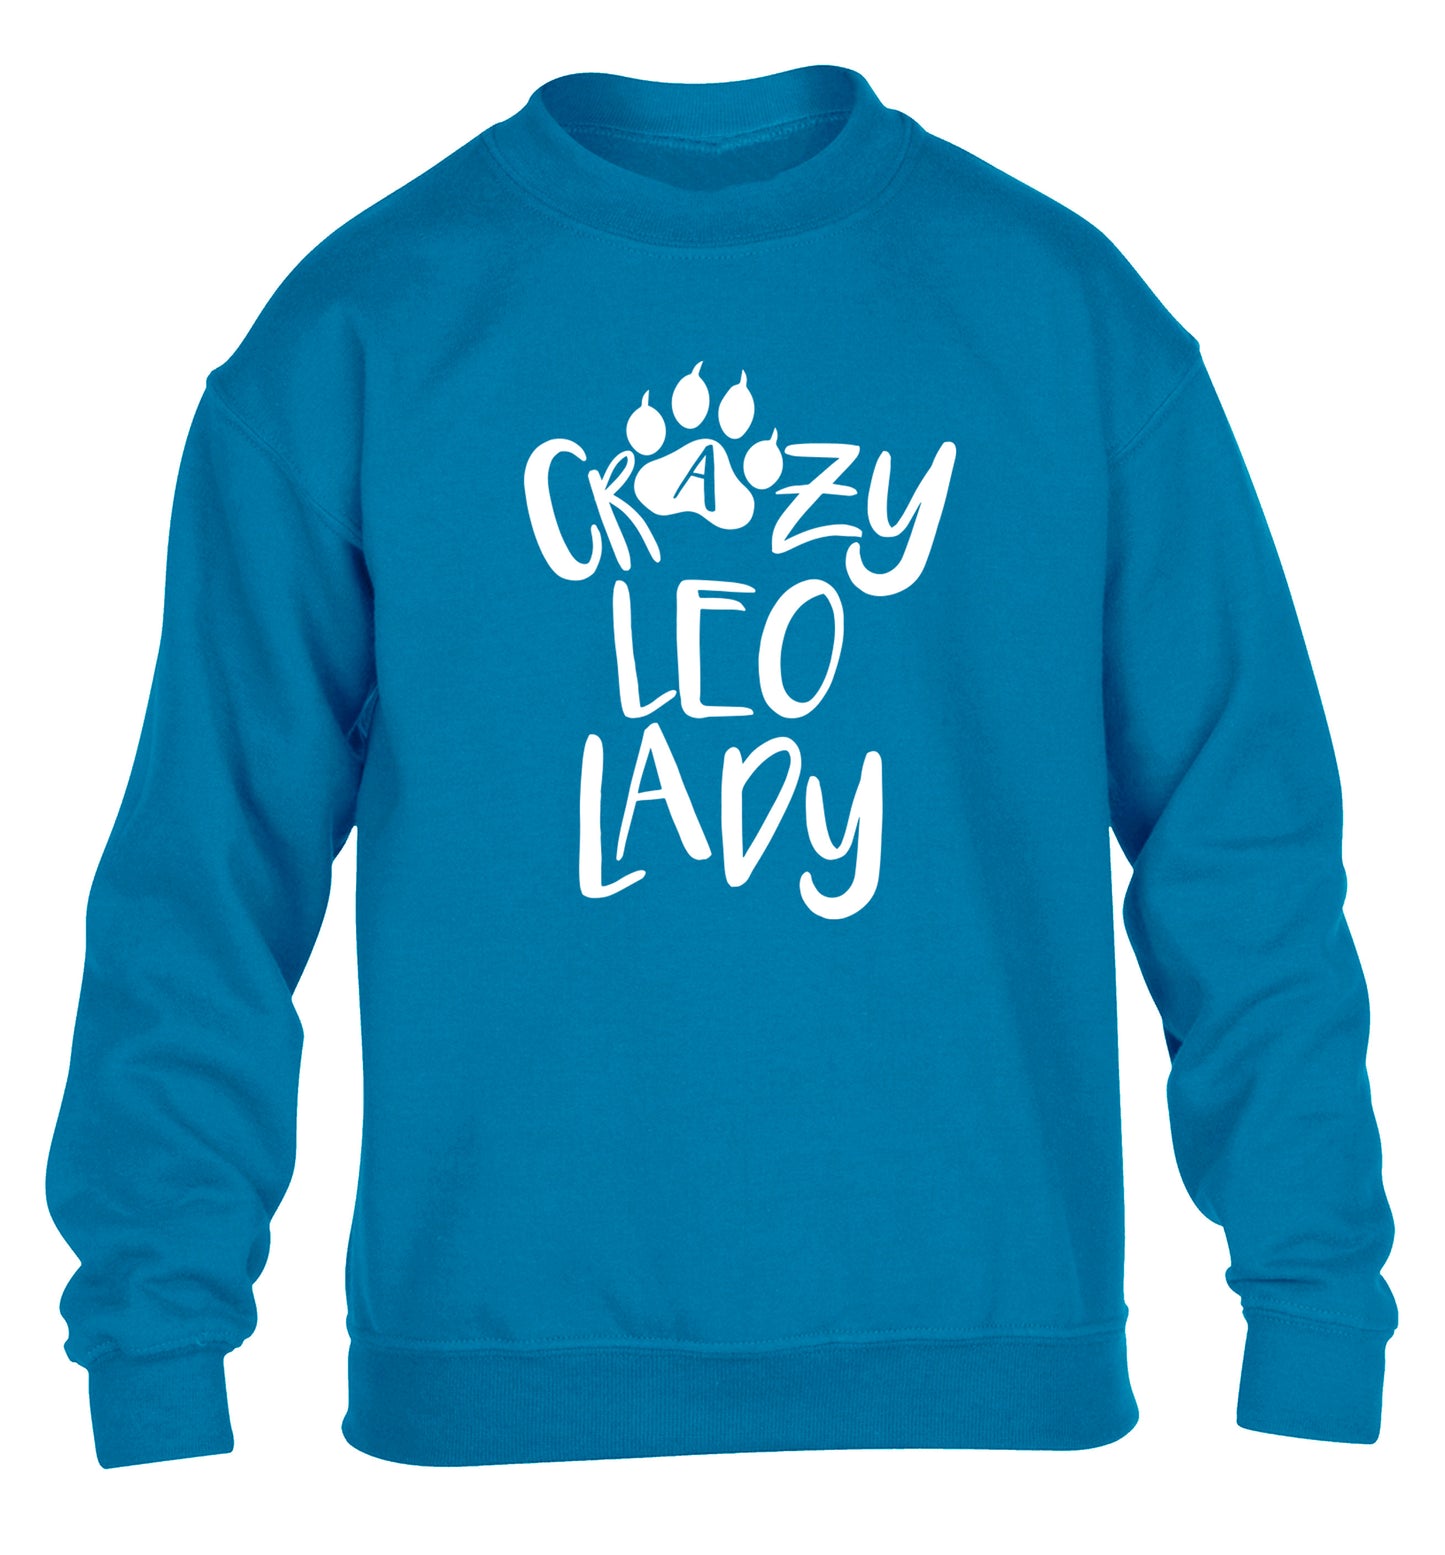 Crazy leo lady children's blue sweater 12-13 Years